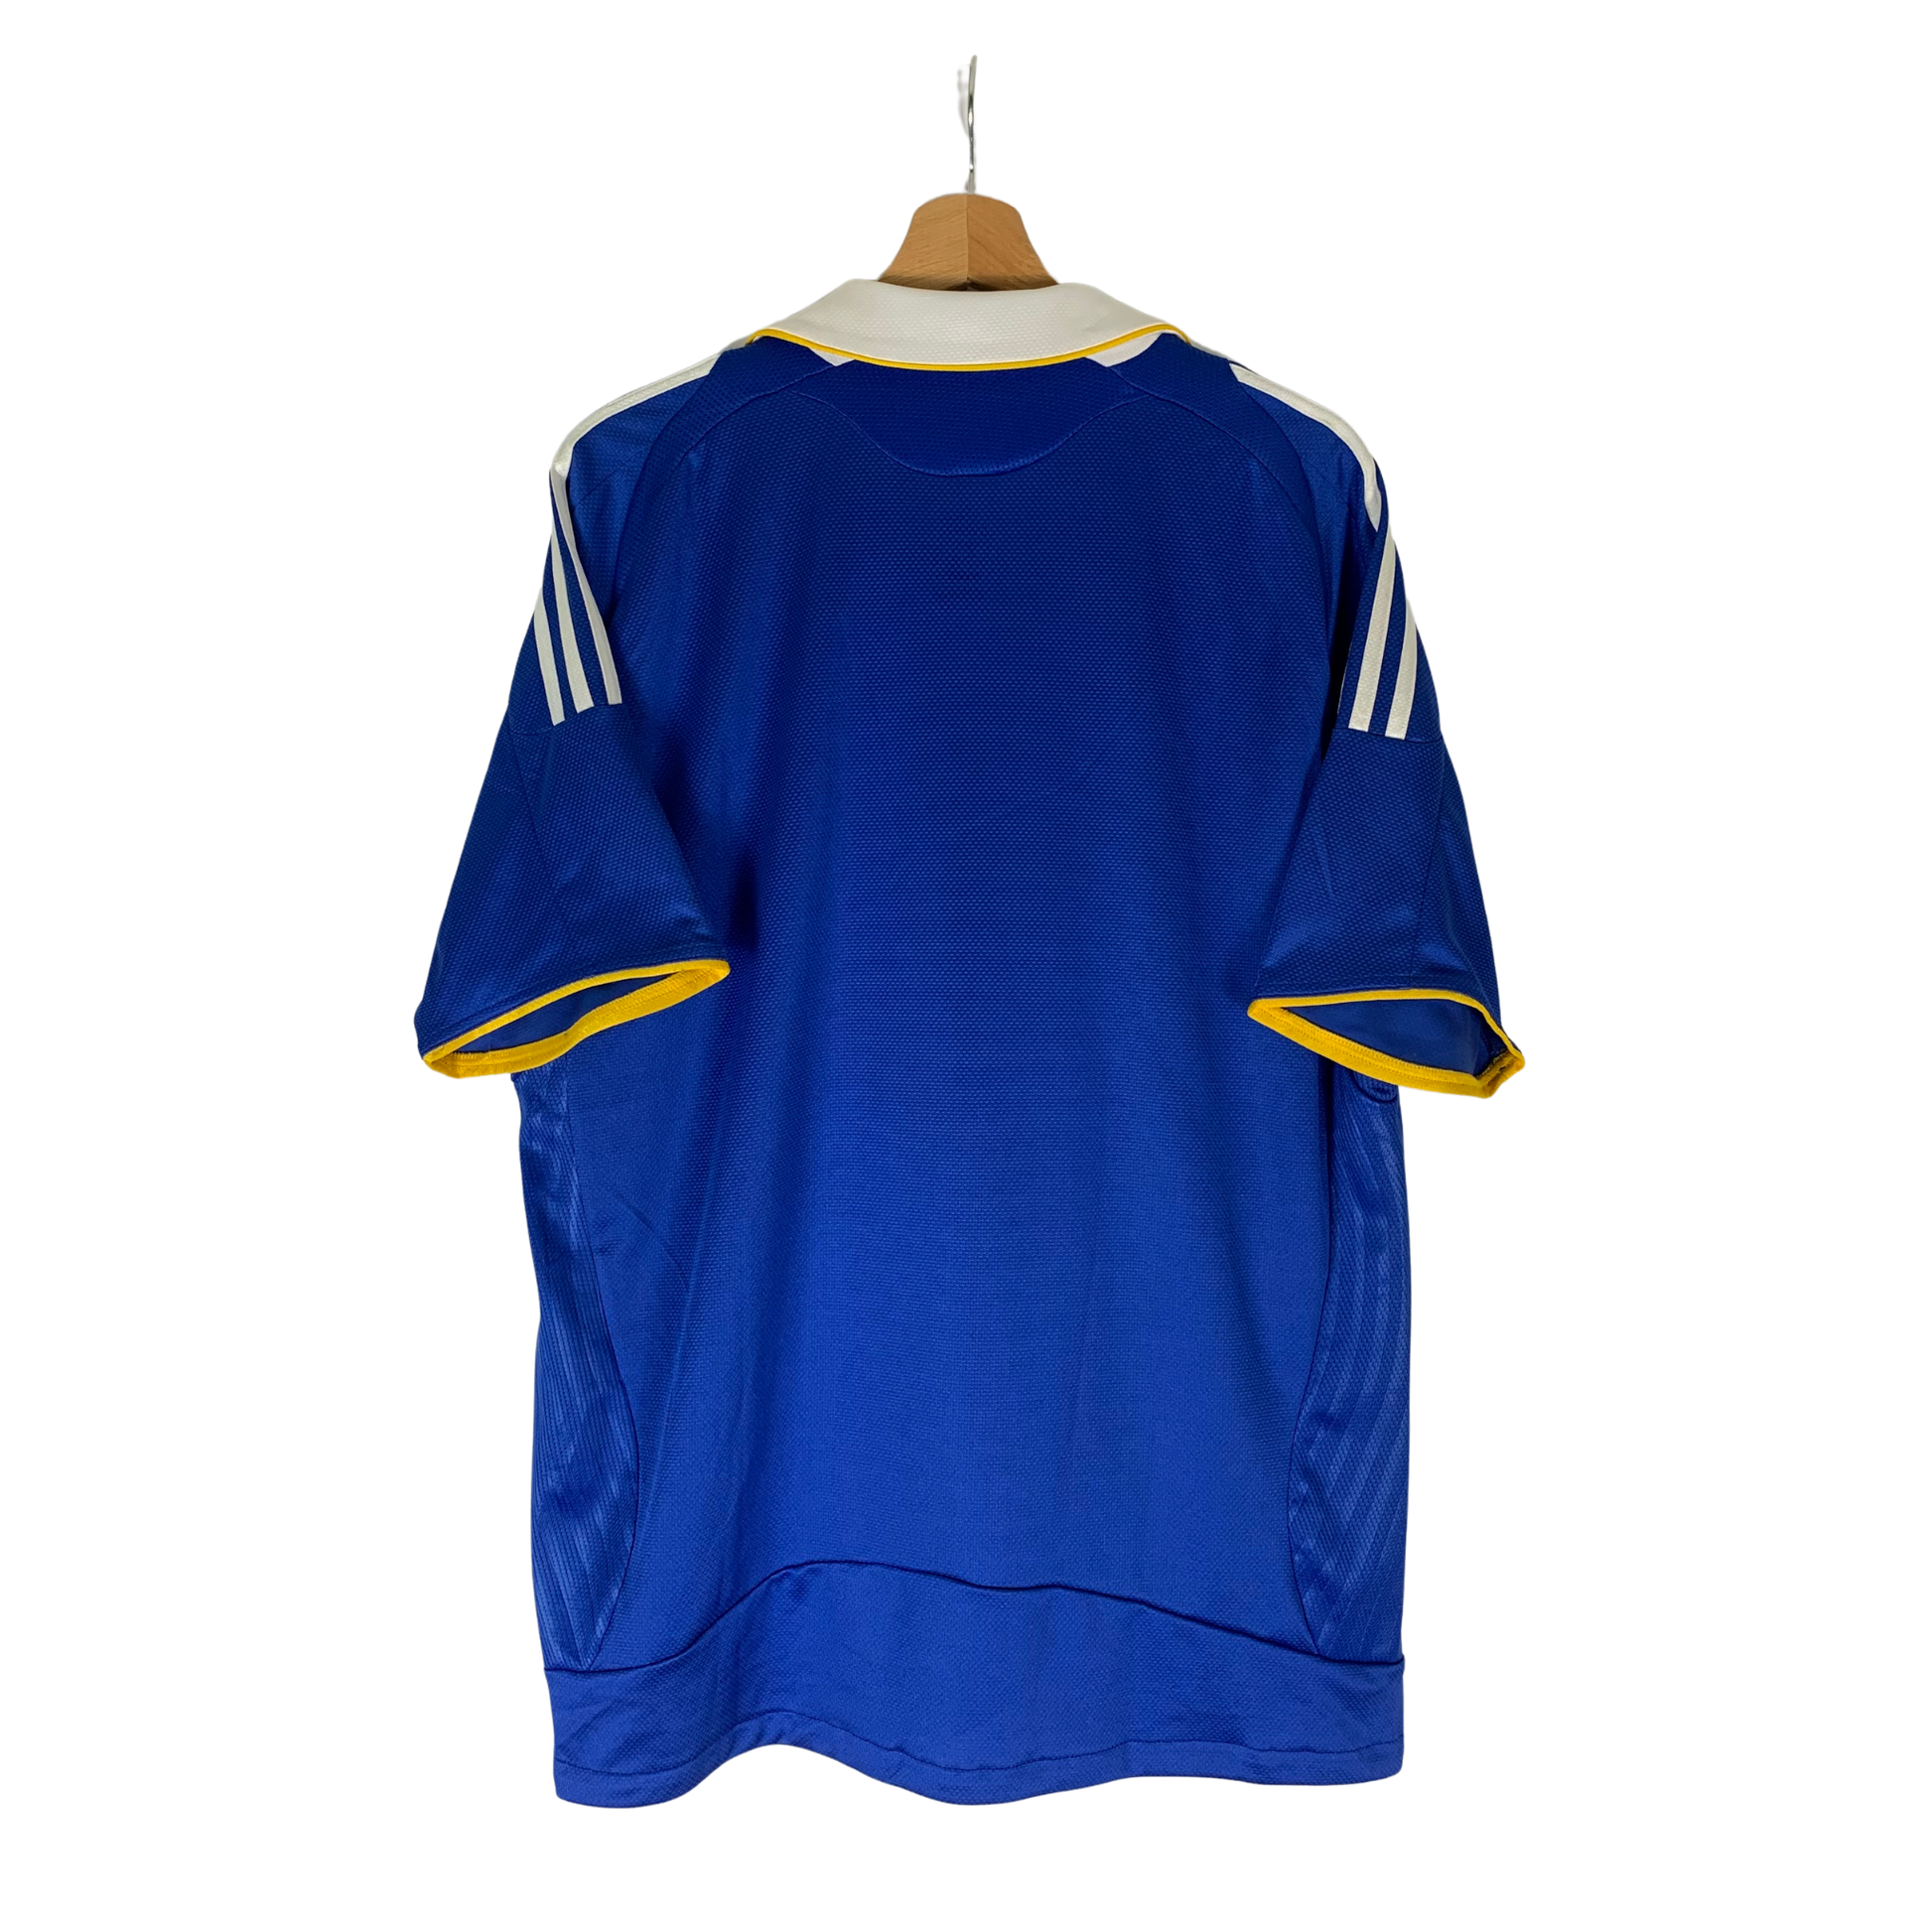 Classic Football Shirt Chelsea season 2008-2009 at InnoFoot